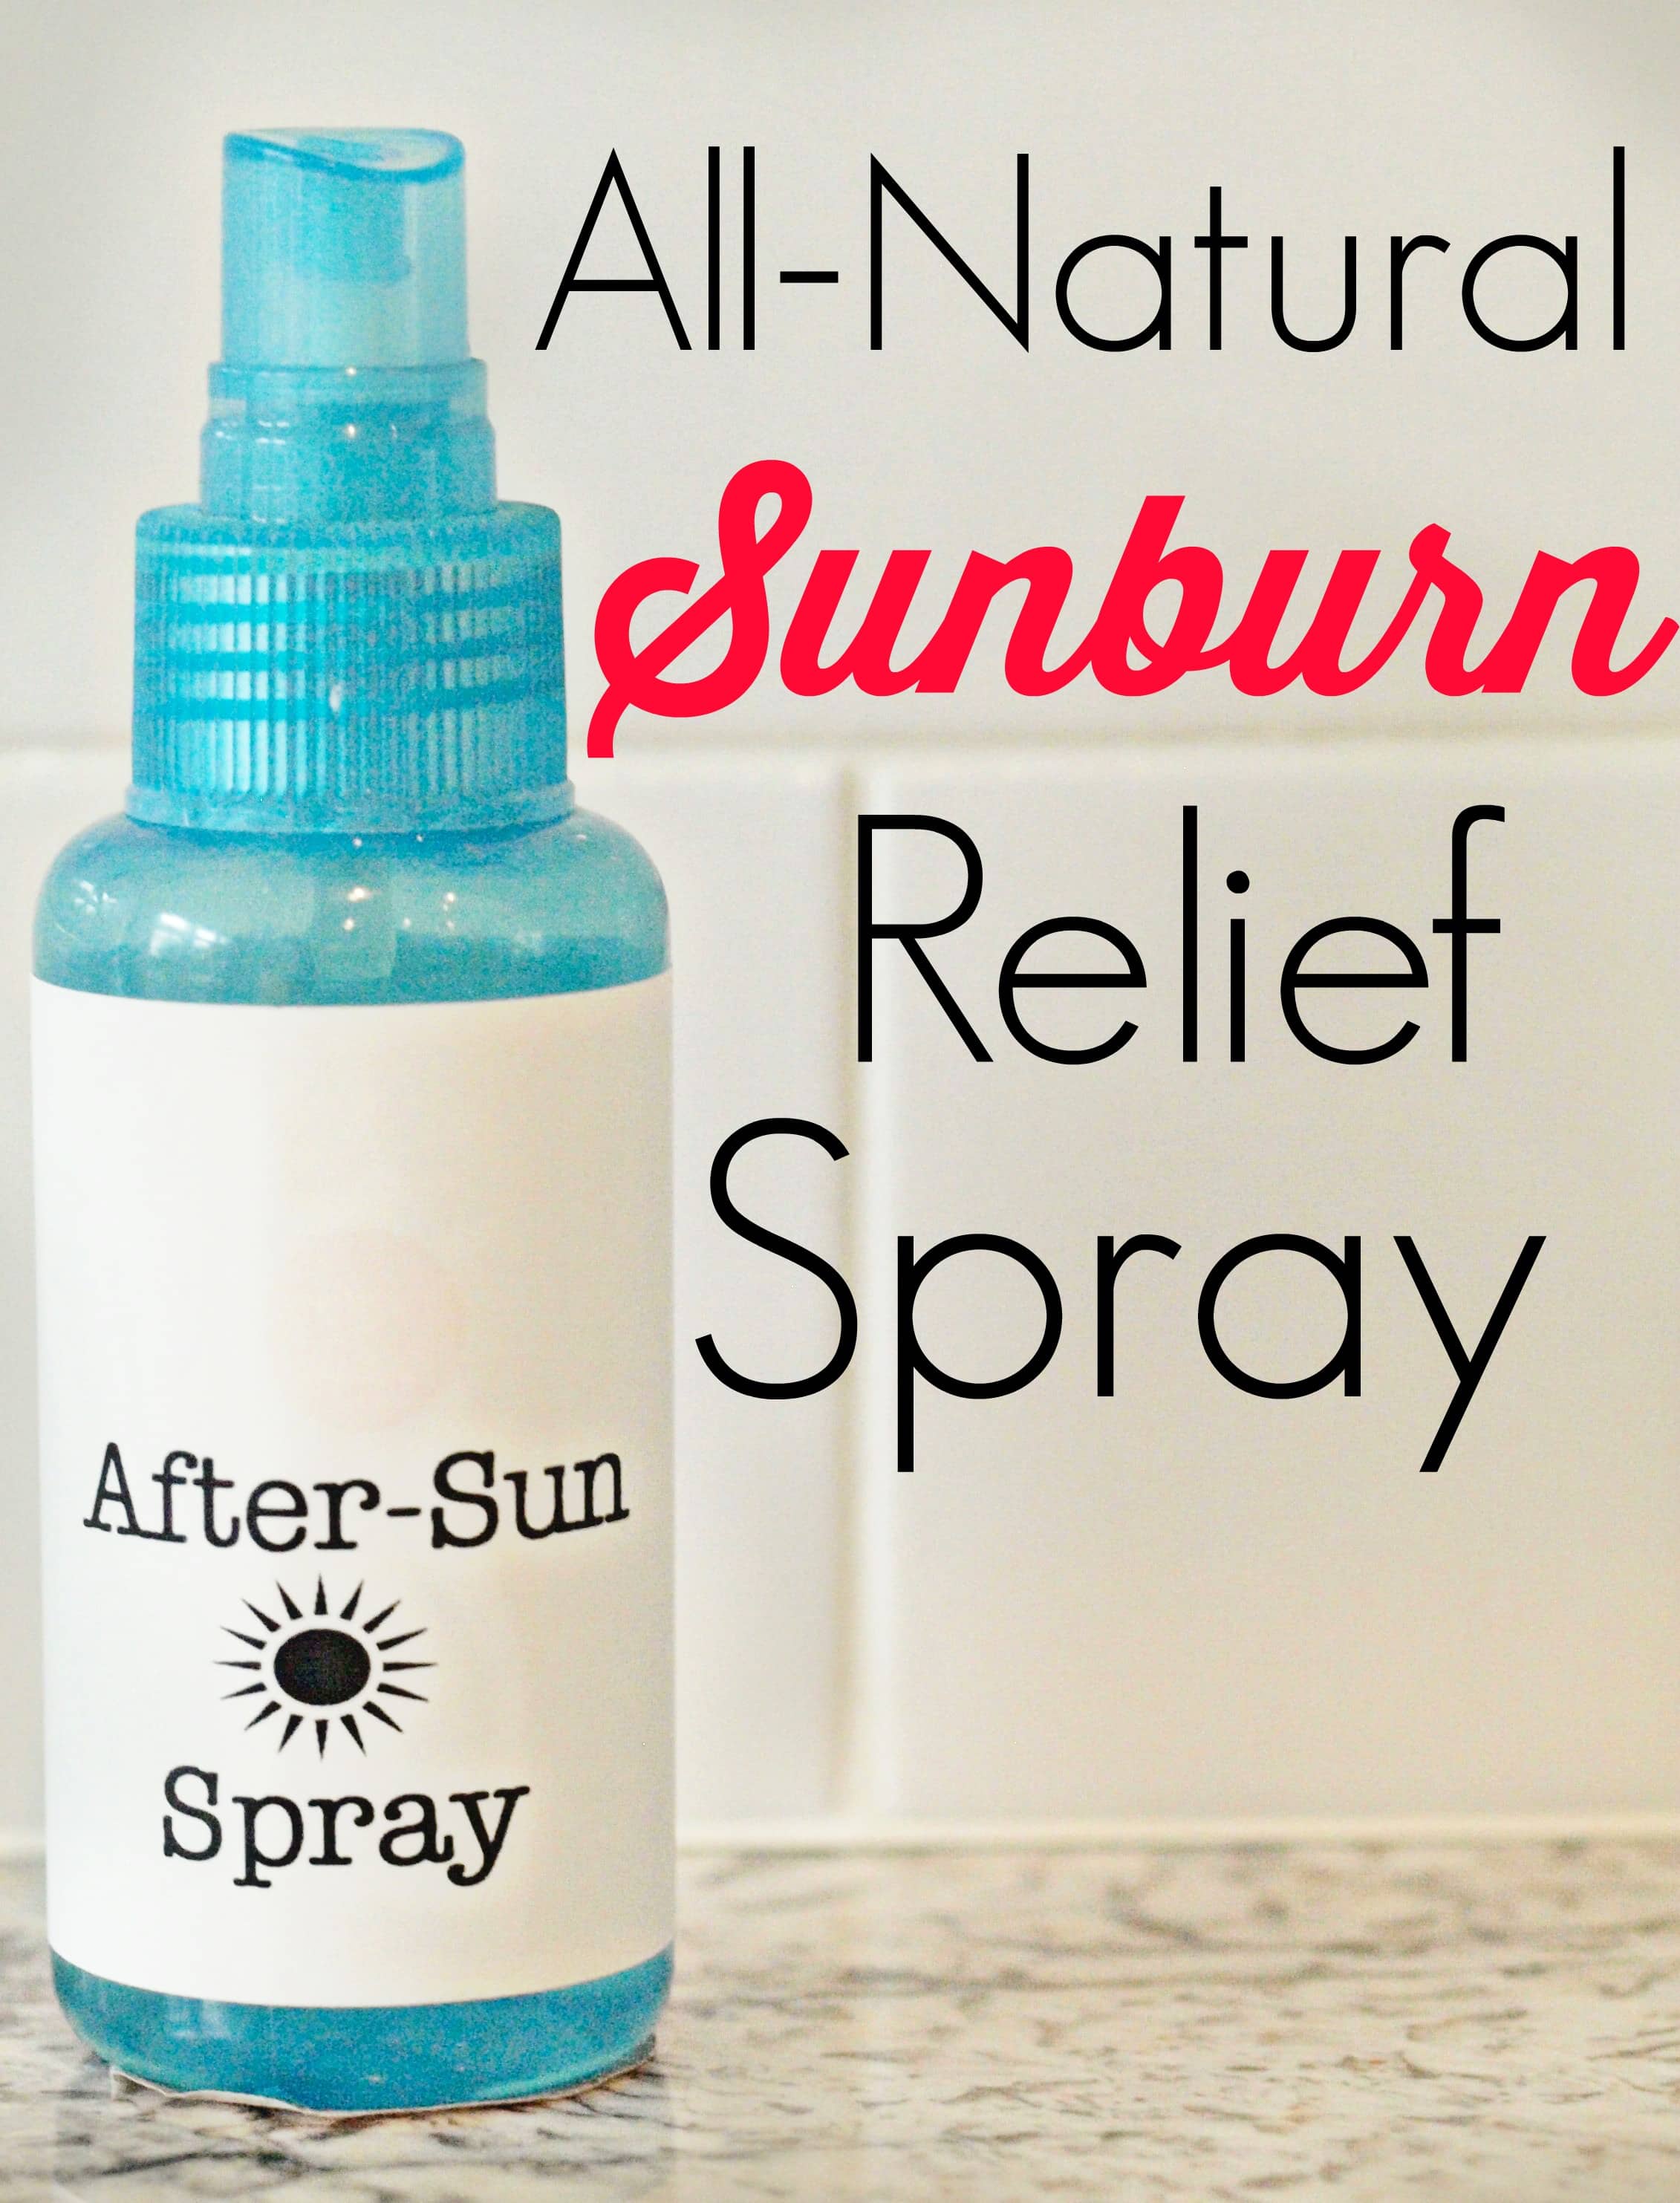 DIY Natural Sunburn Relief Cream - Happiness is Homemade